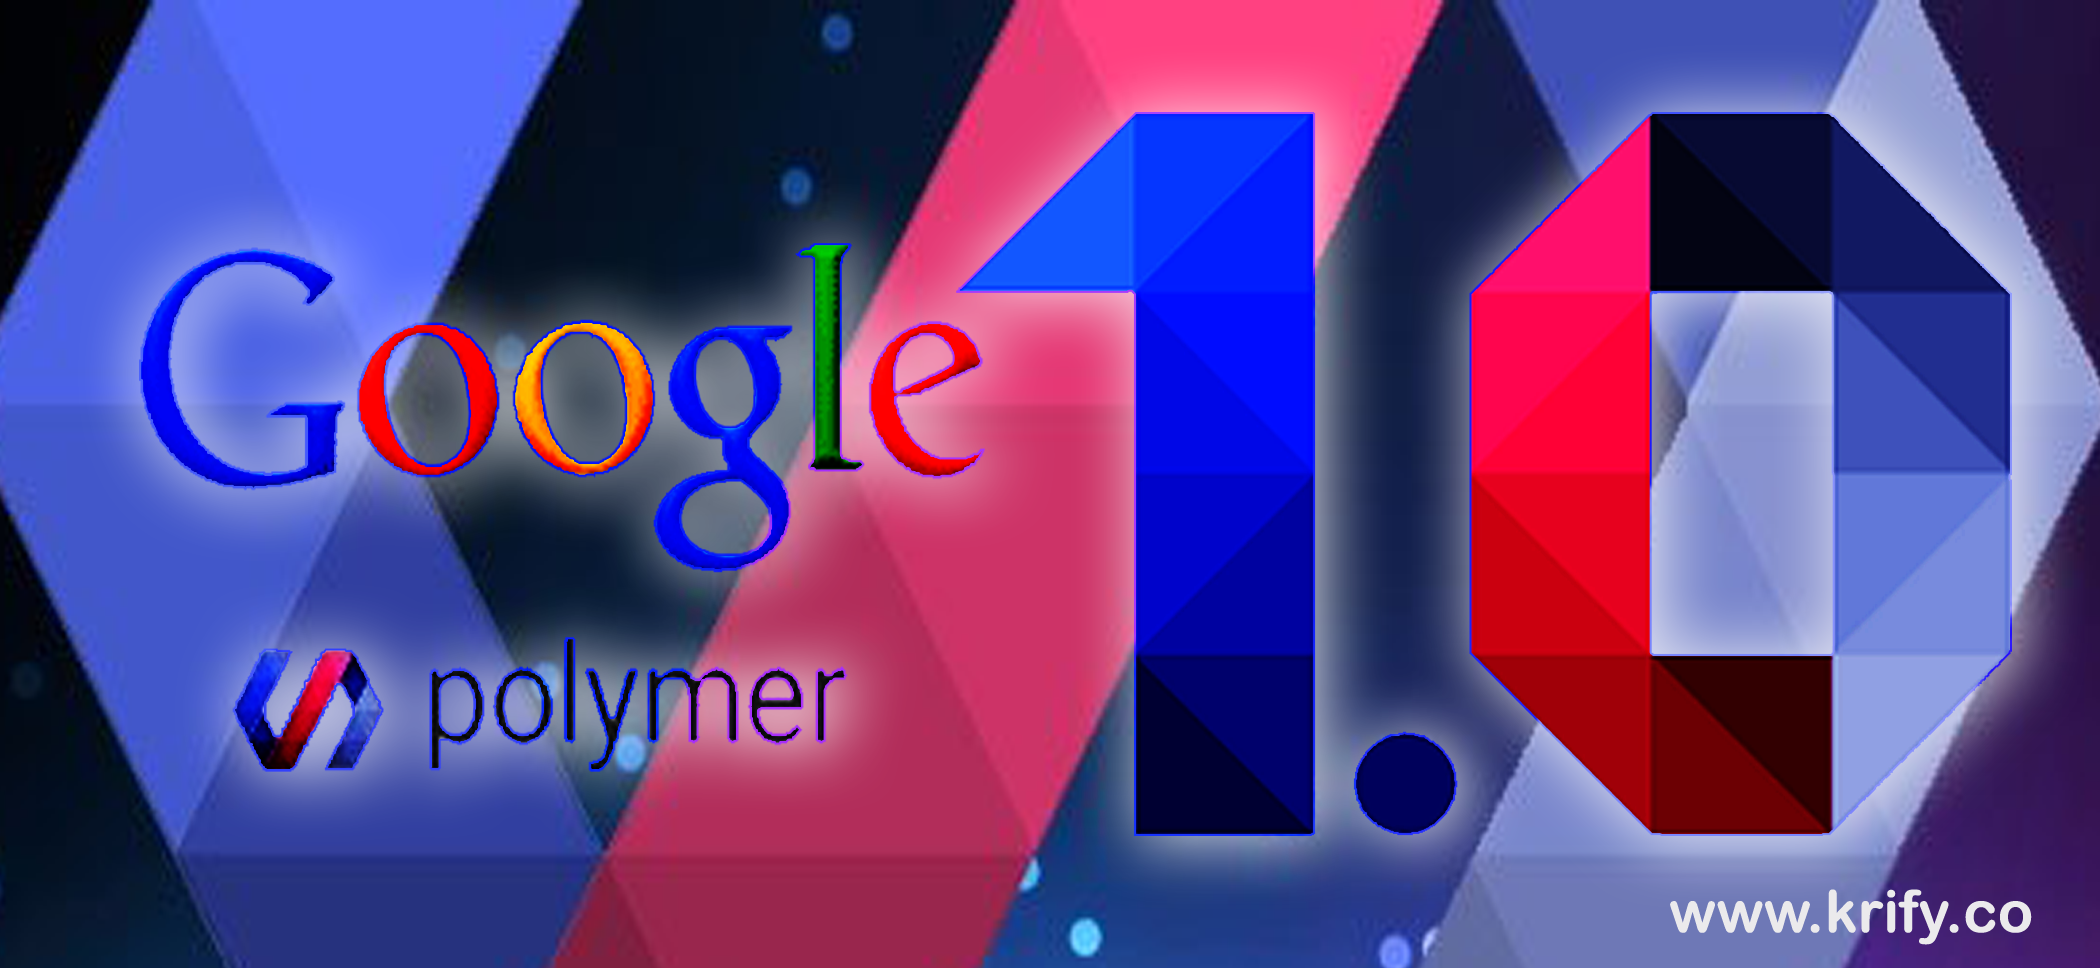 Google Polymer